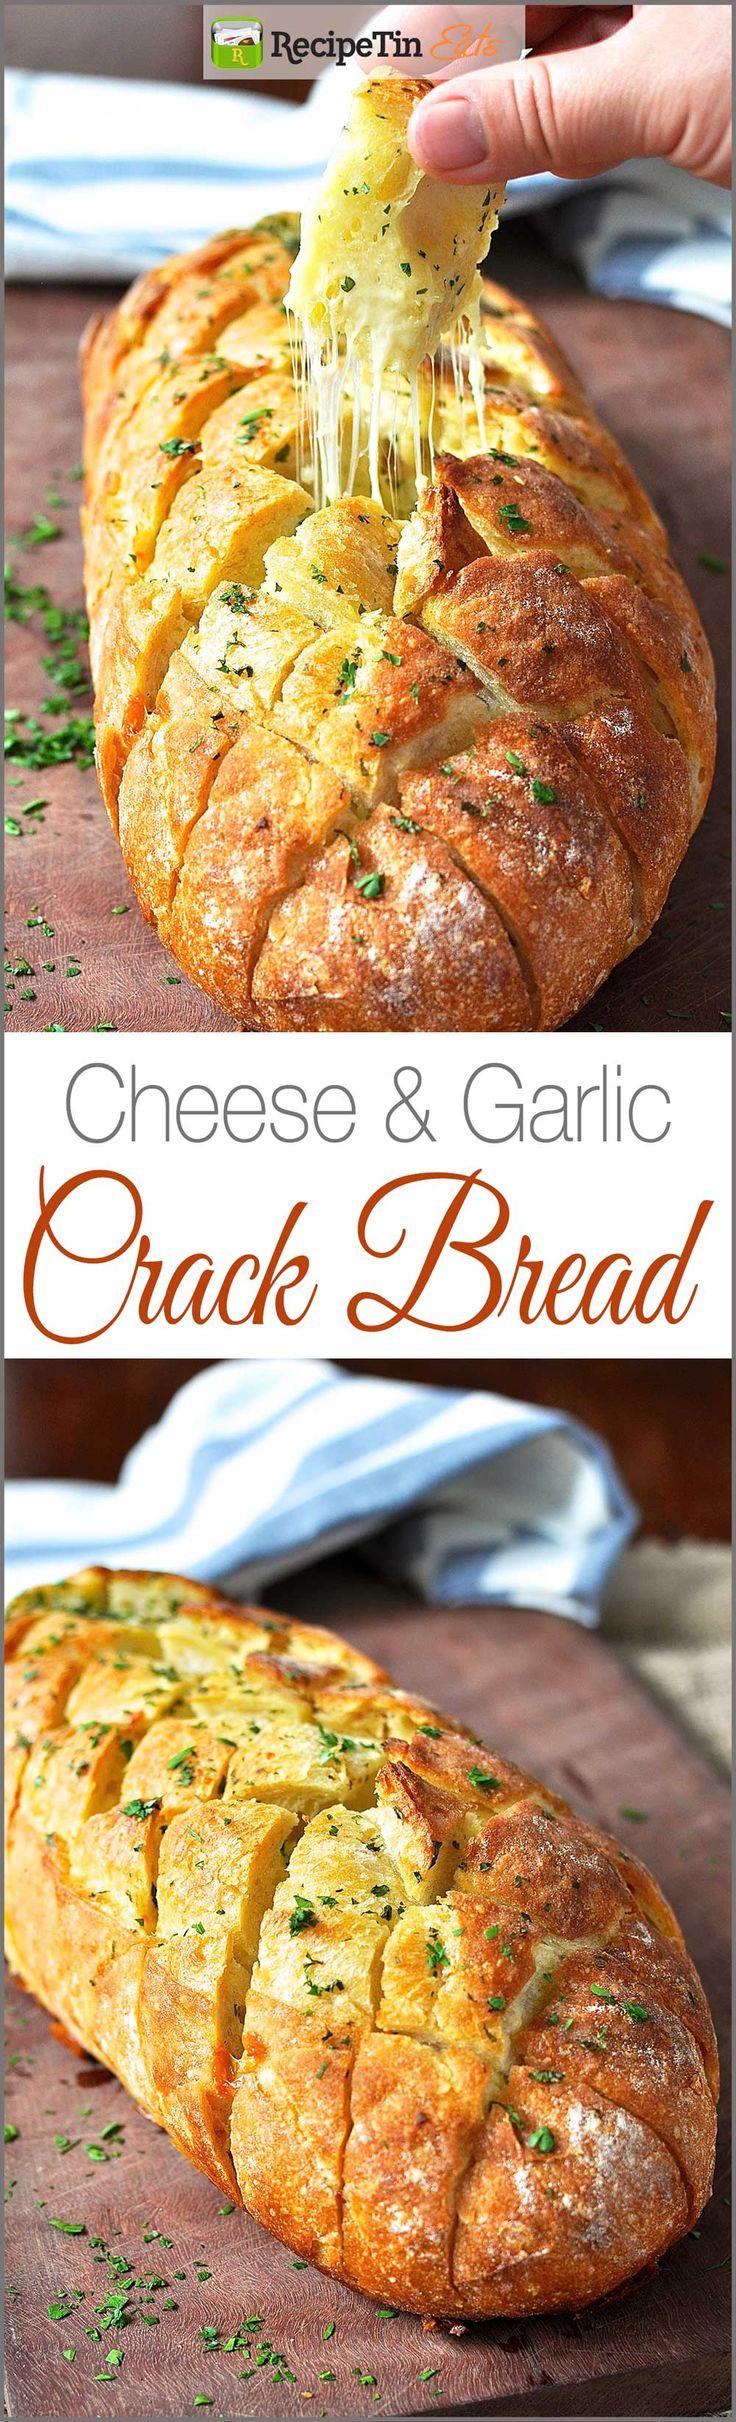 زفاف - Cheese And Garlic Crack Bread (Pull Apart Bread)